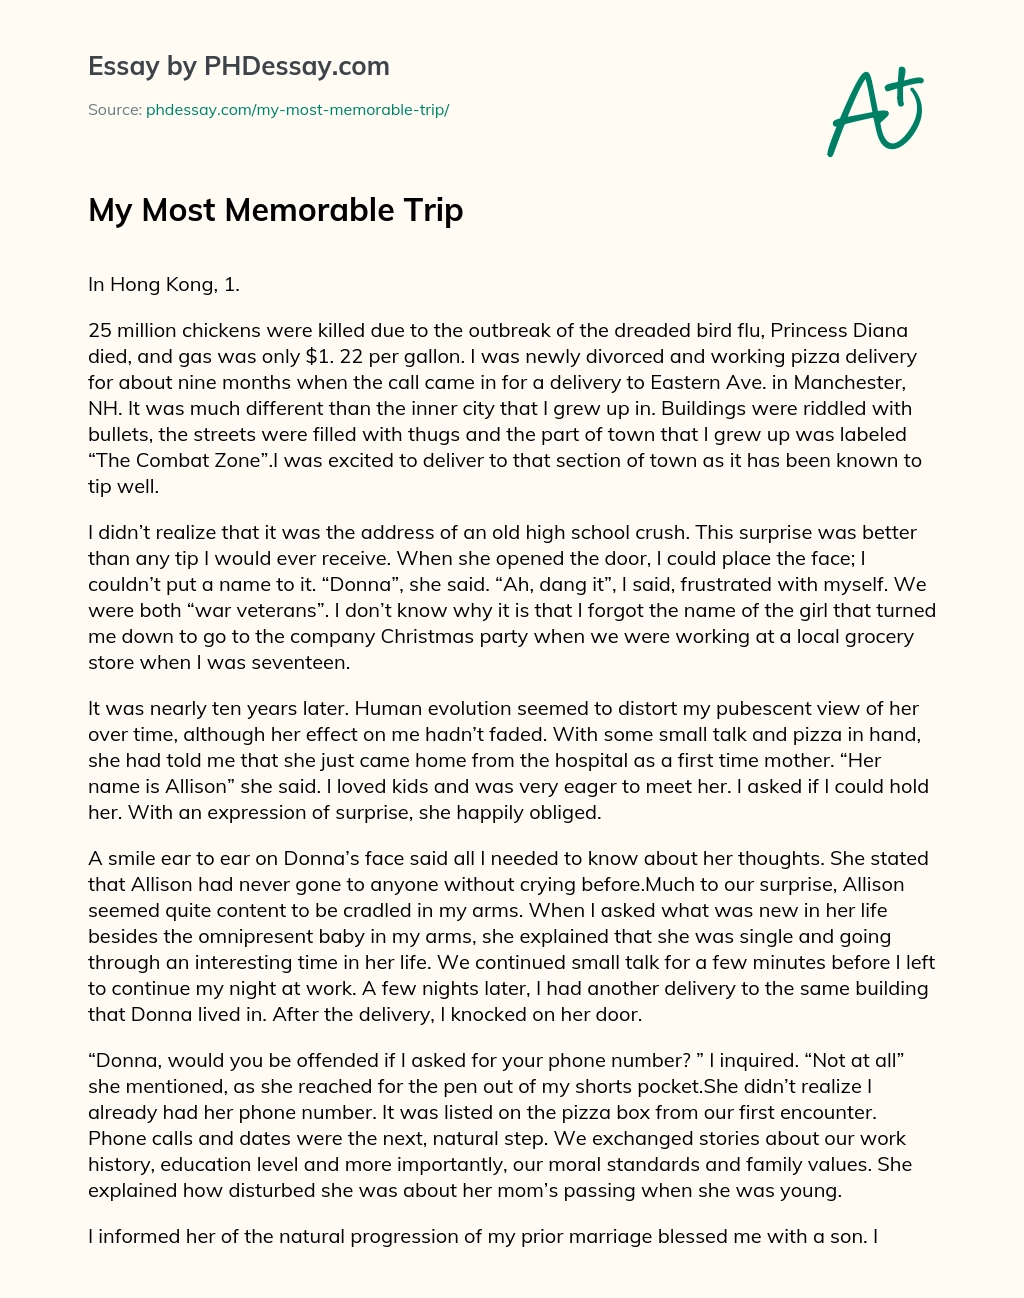 an essay about a wonderful trip